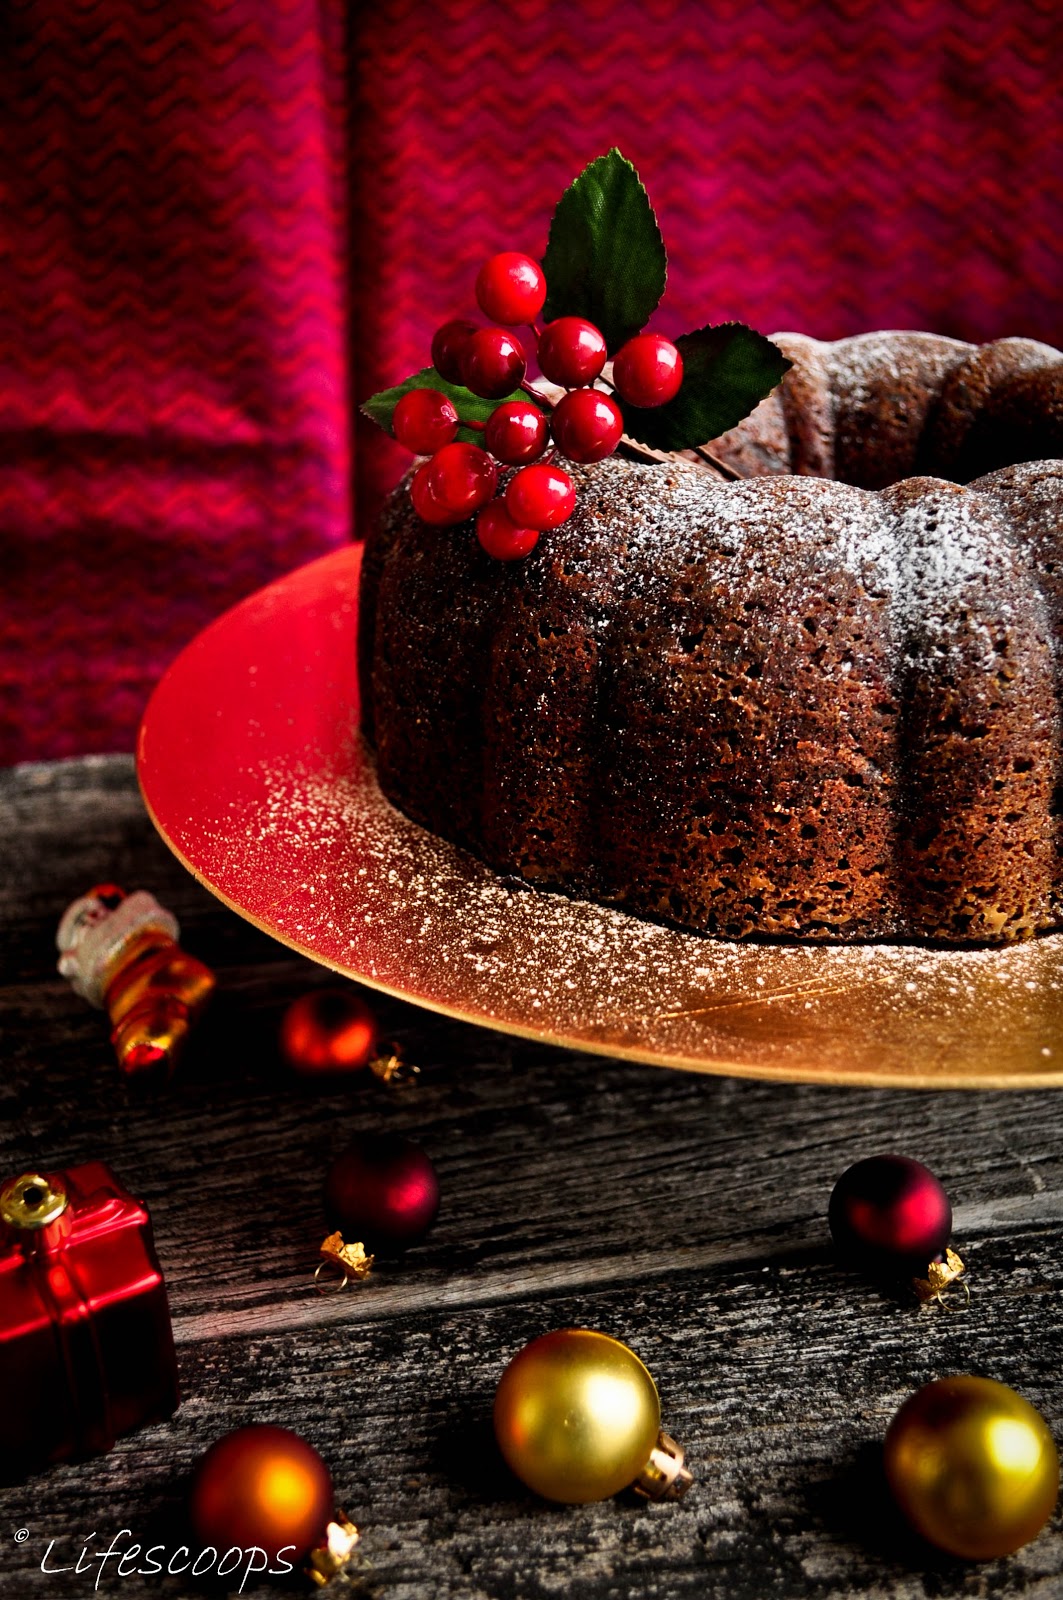 Life Scoops: Christmas Fruit Cake / Kerala Plum Cake